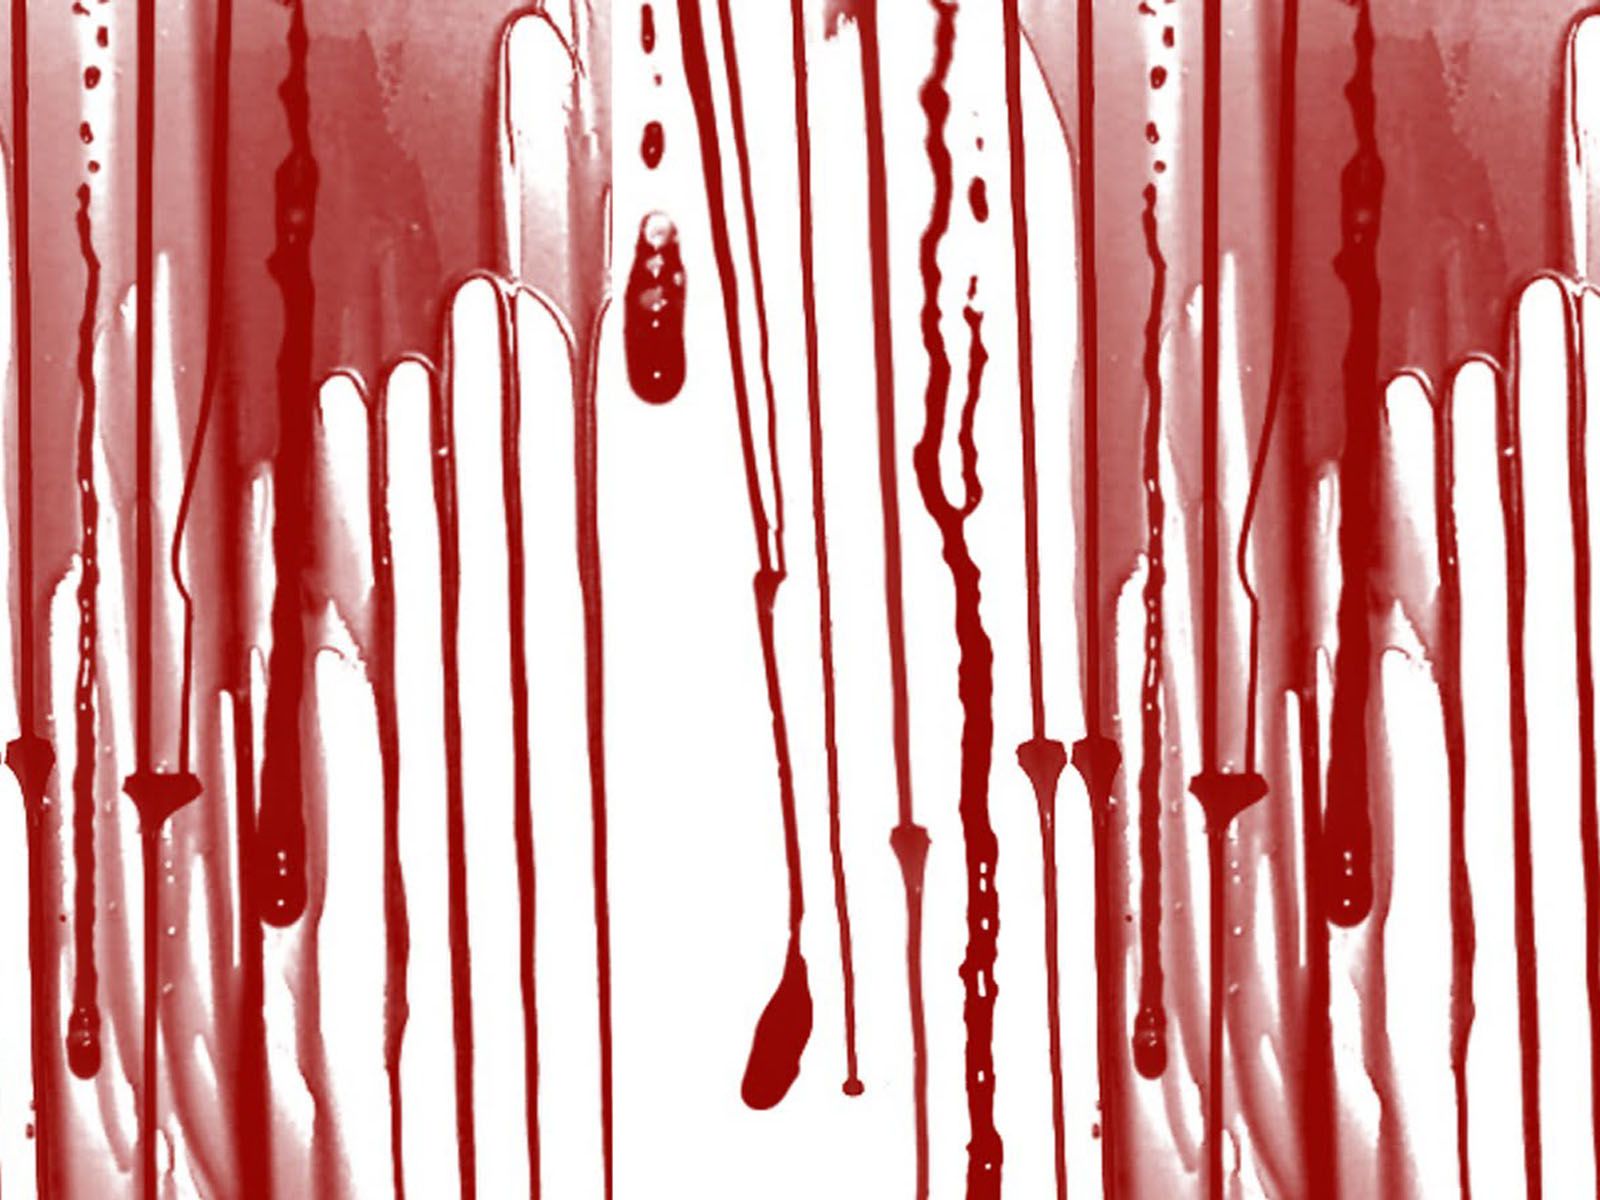 blood images